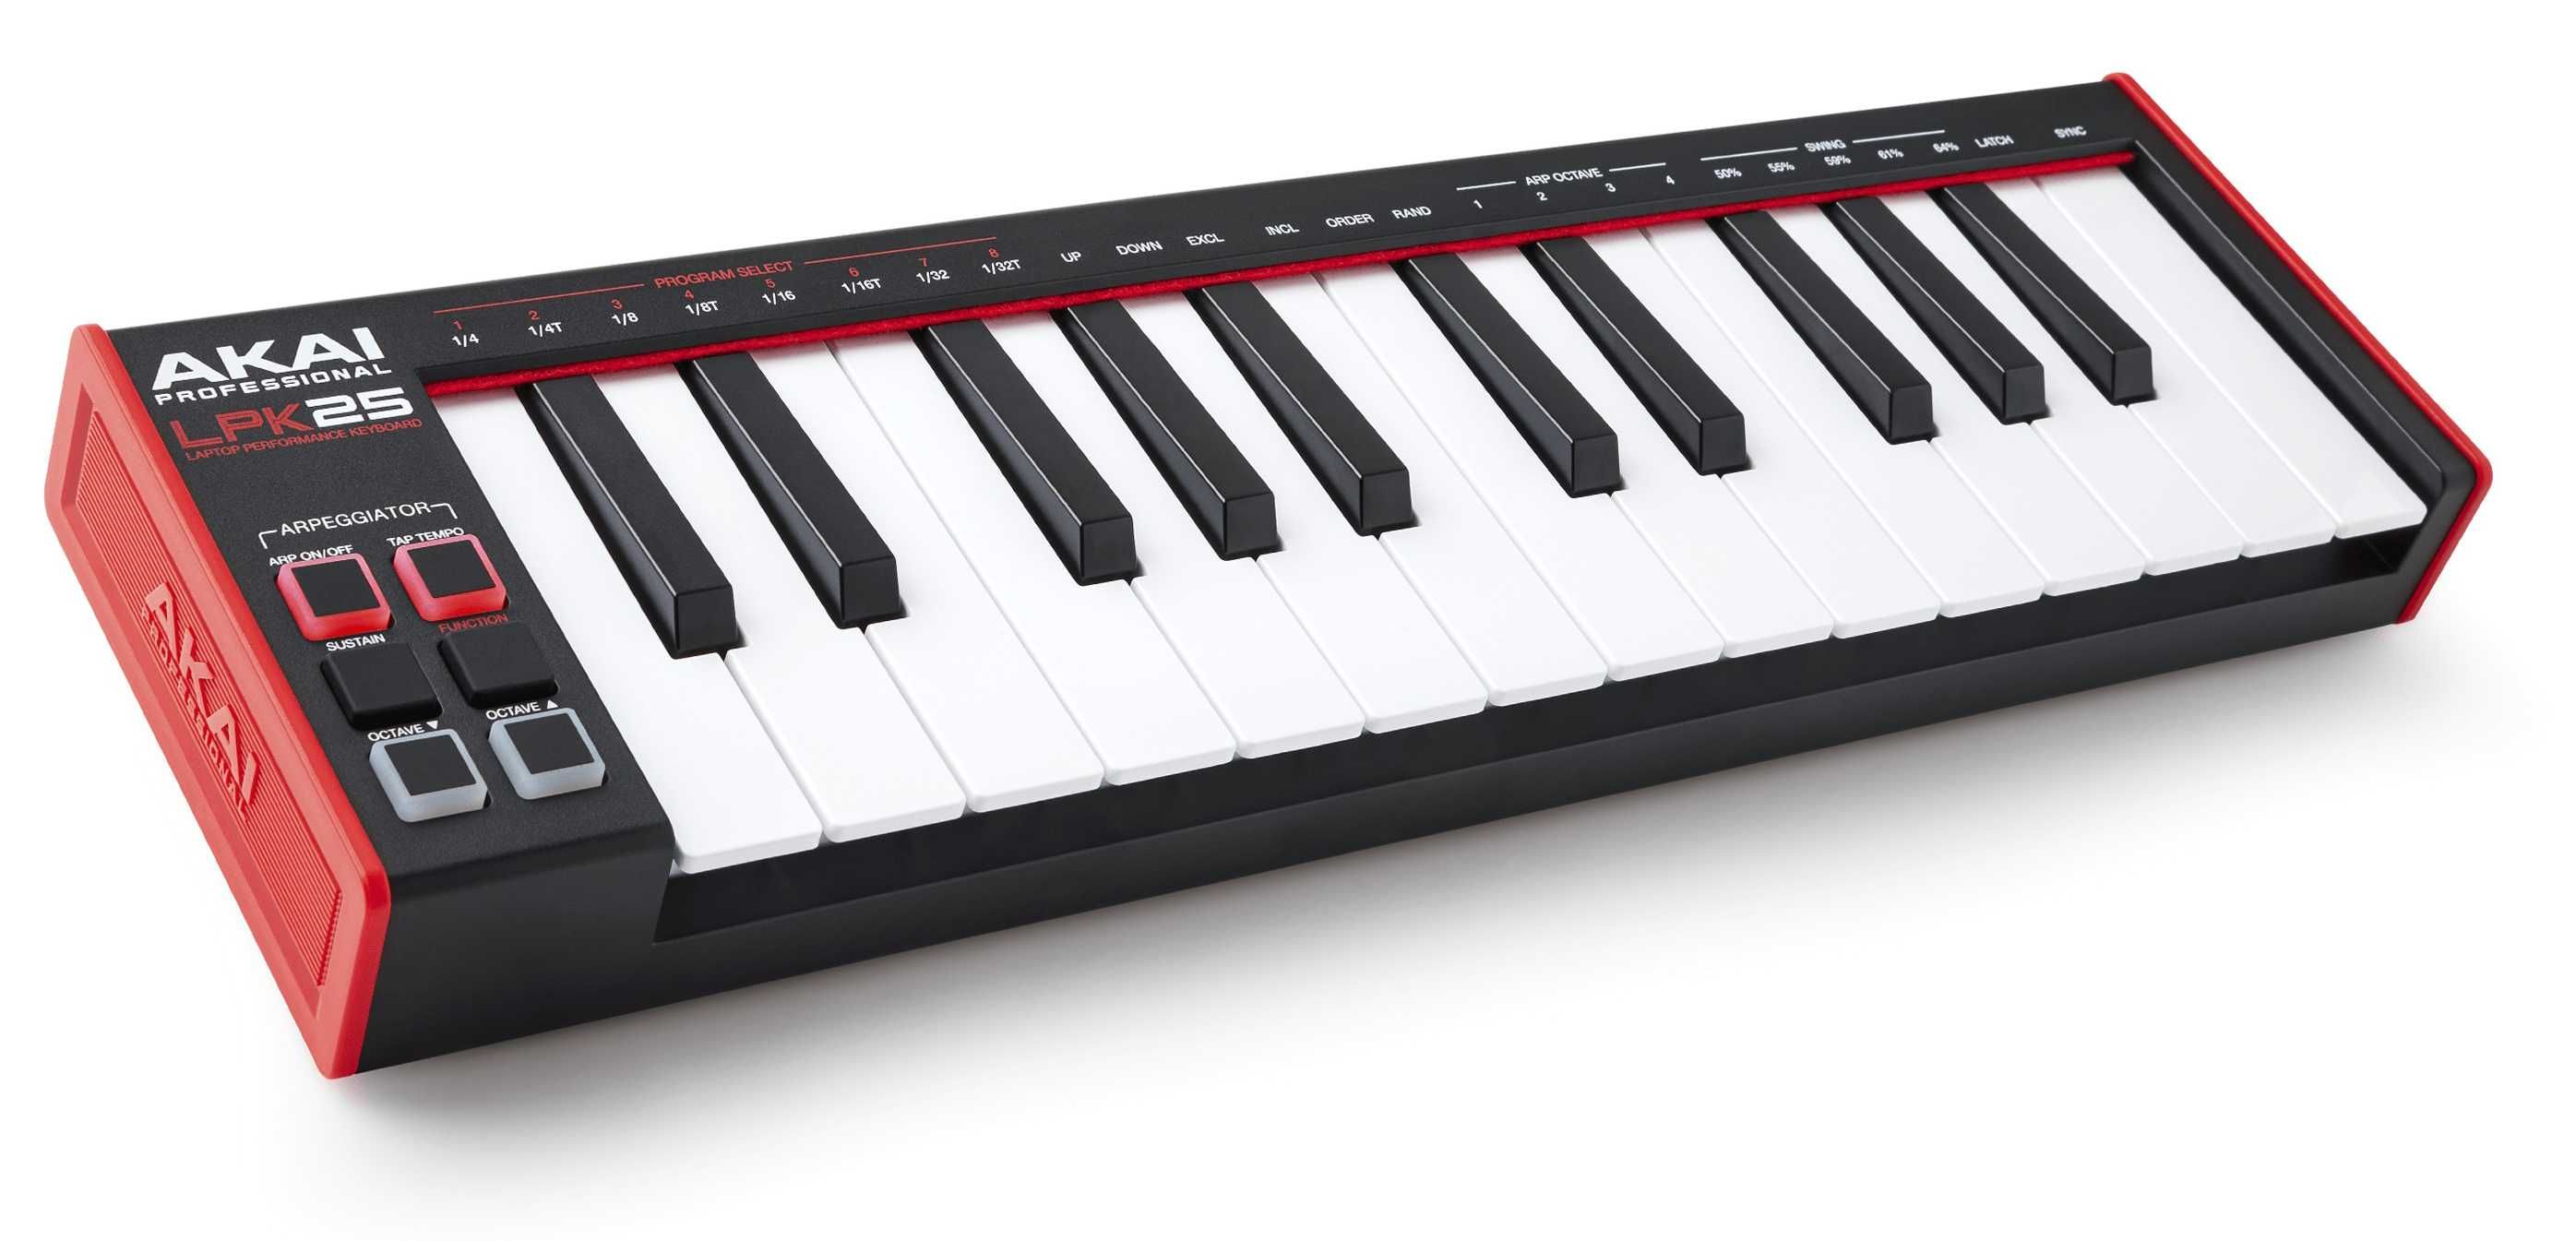 Продается AKAI Professional LPK25 - USB MIDI Keyboard Controller